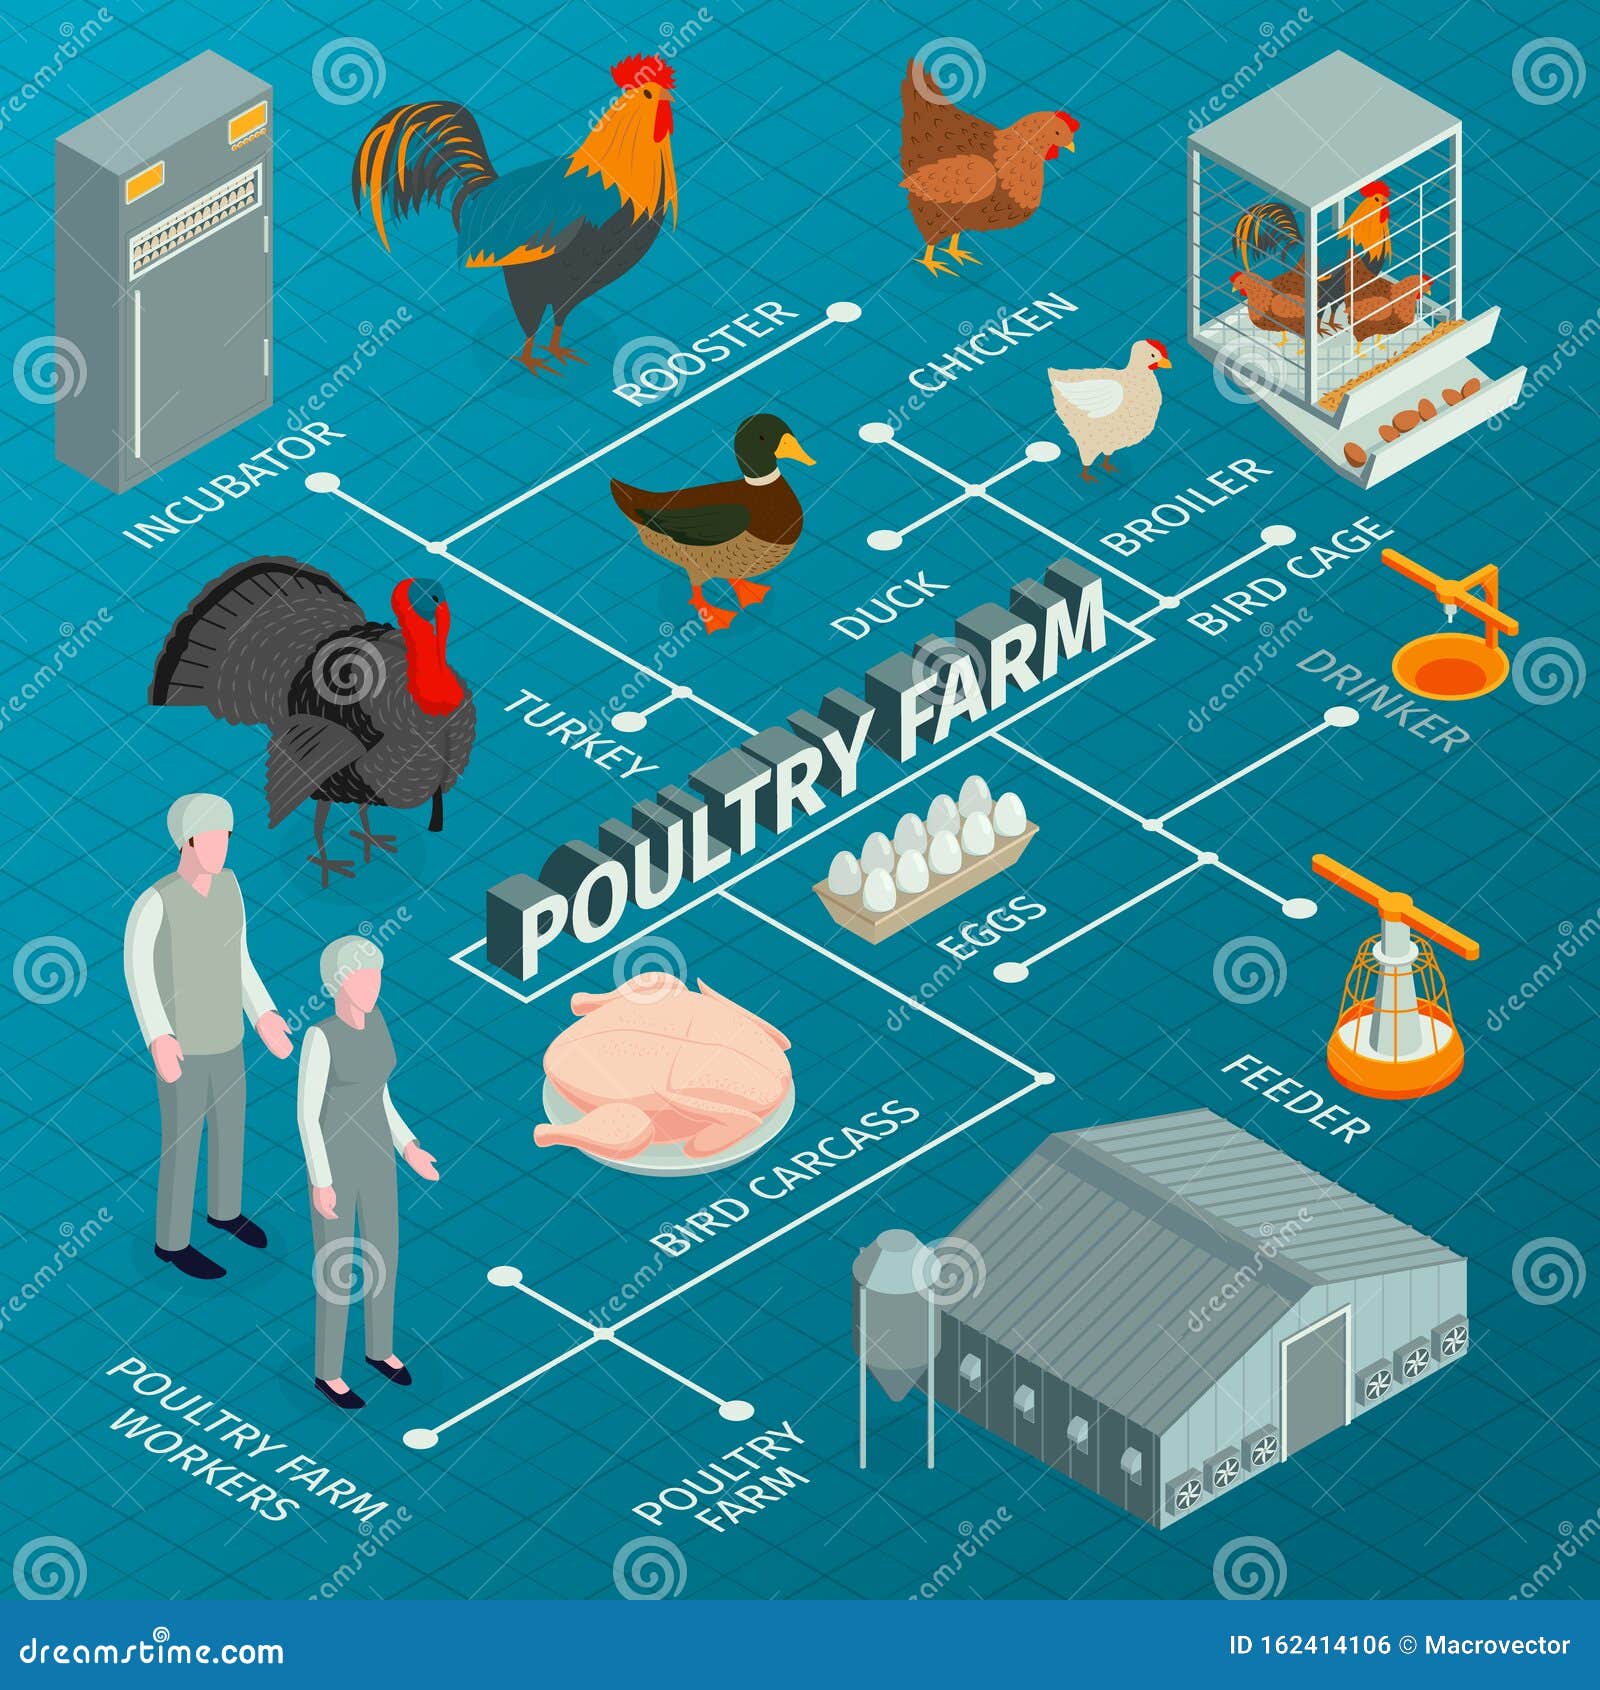 poultry farm isometric flowchart